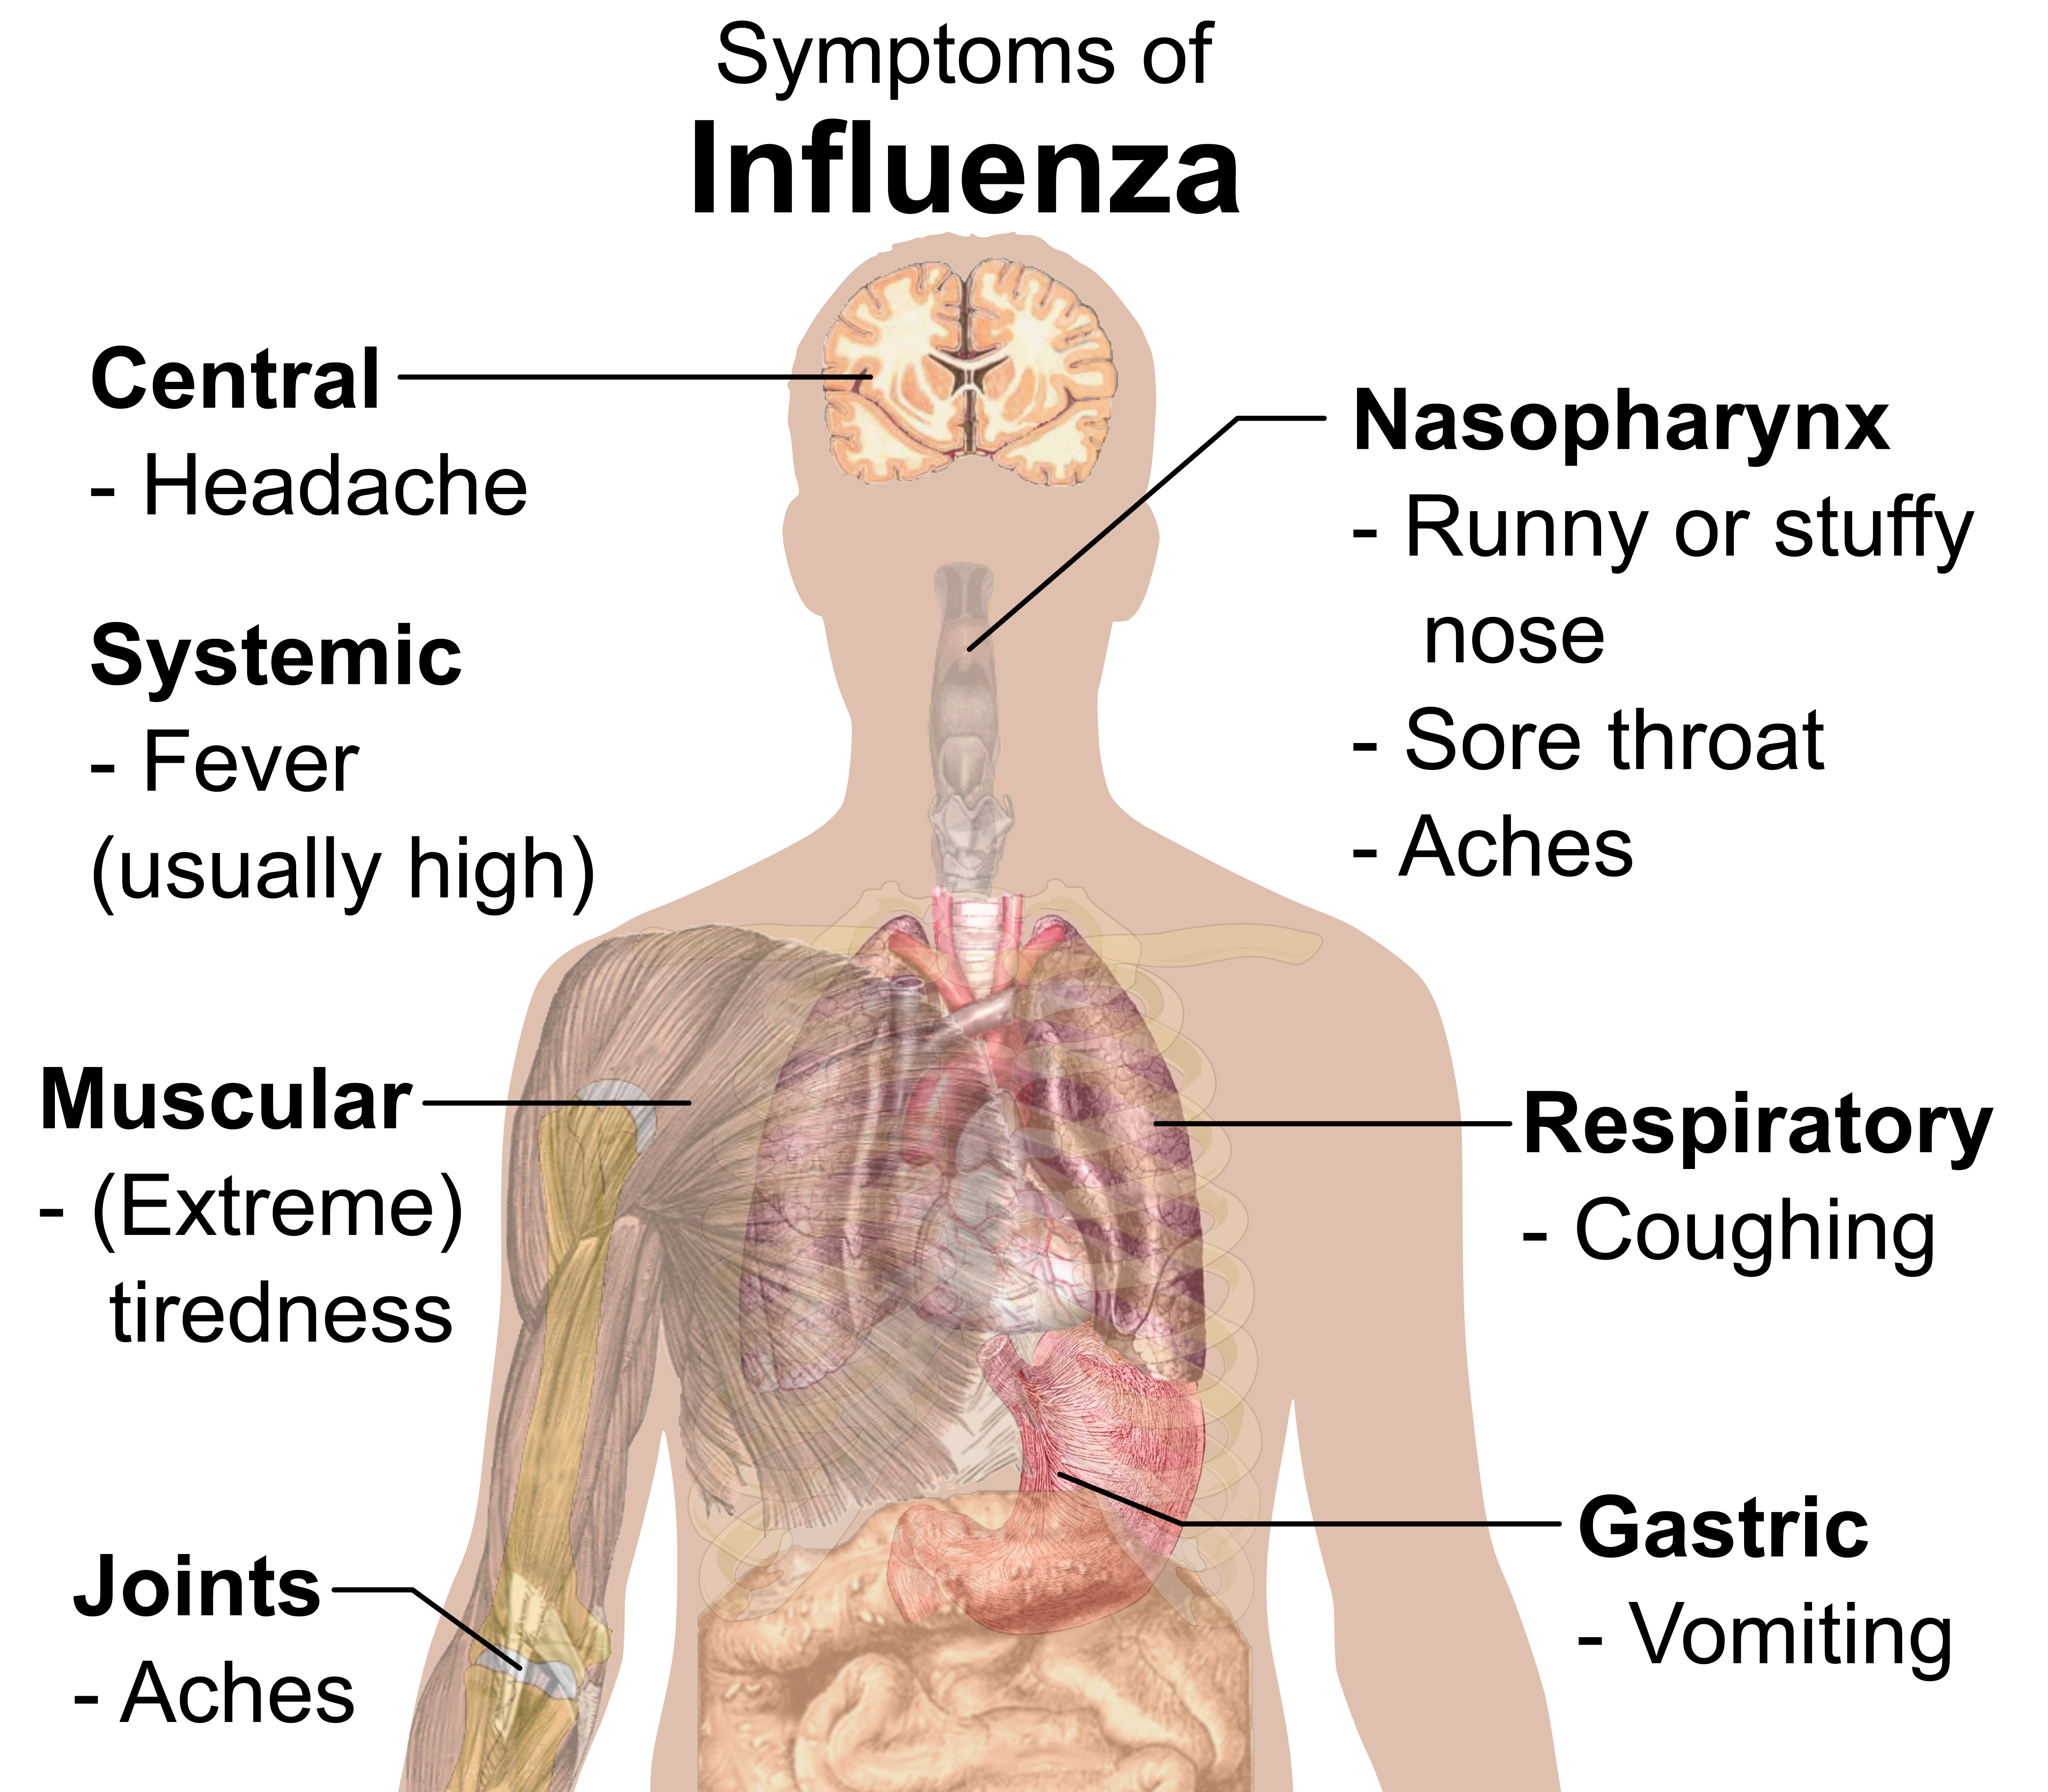 symptoms of flu or influenza- is it flu or sinus infection